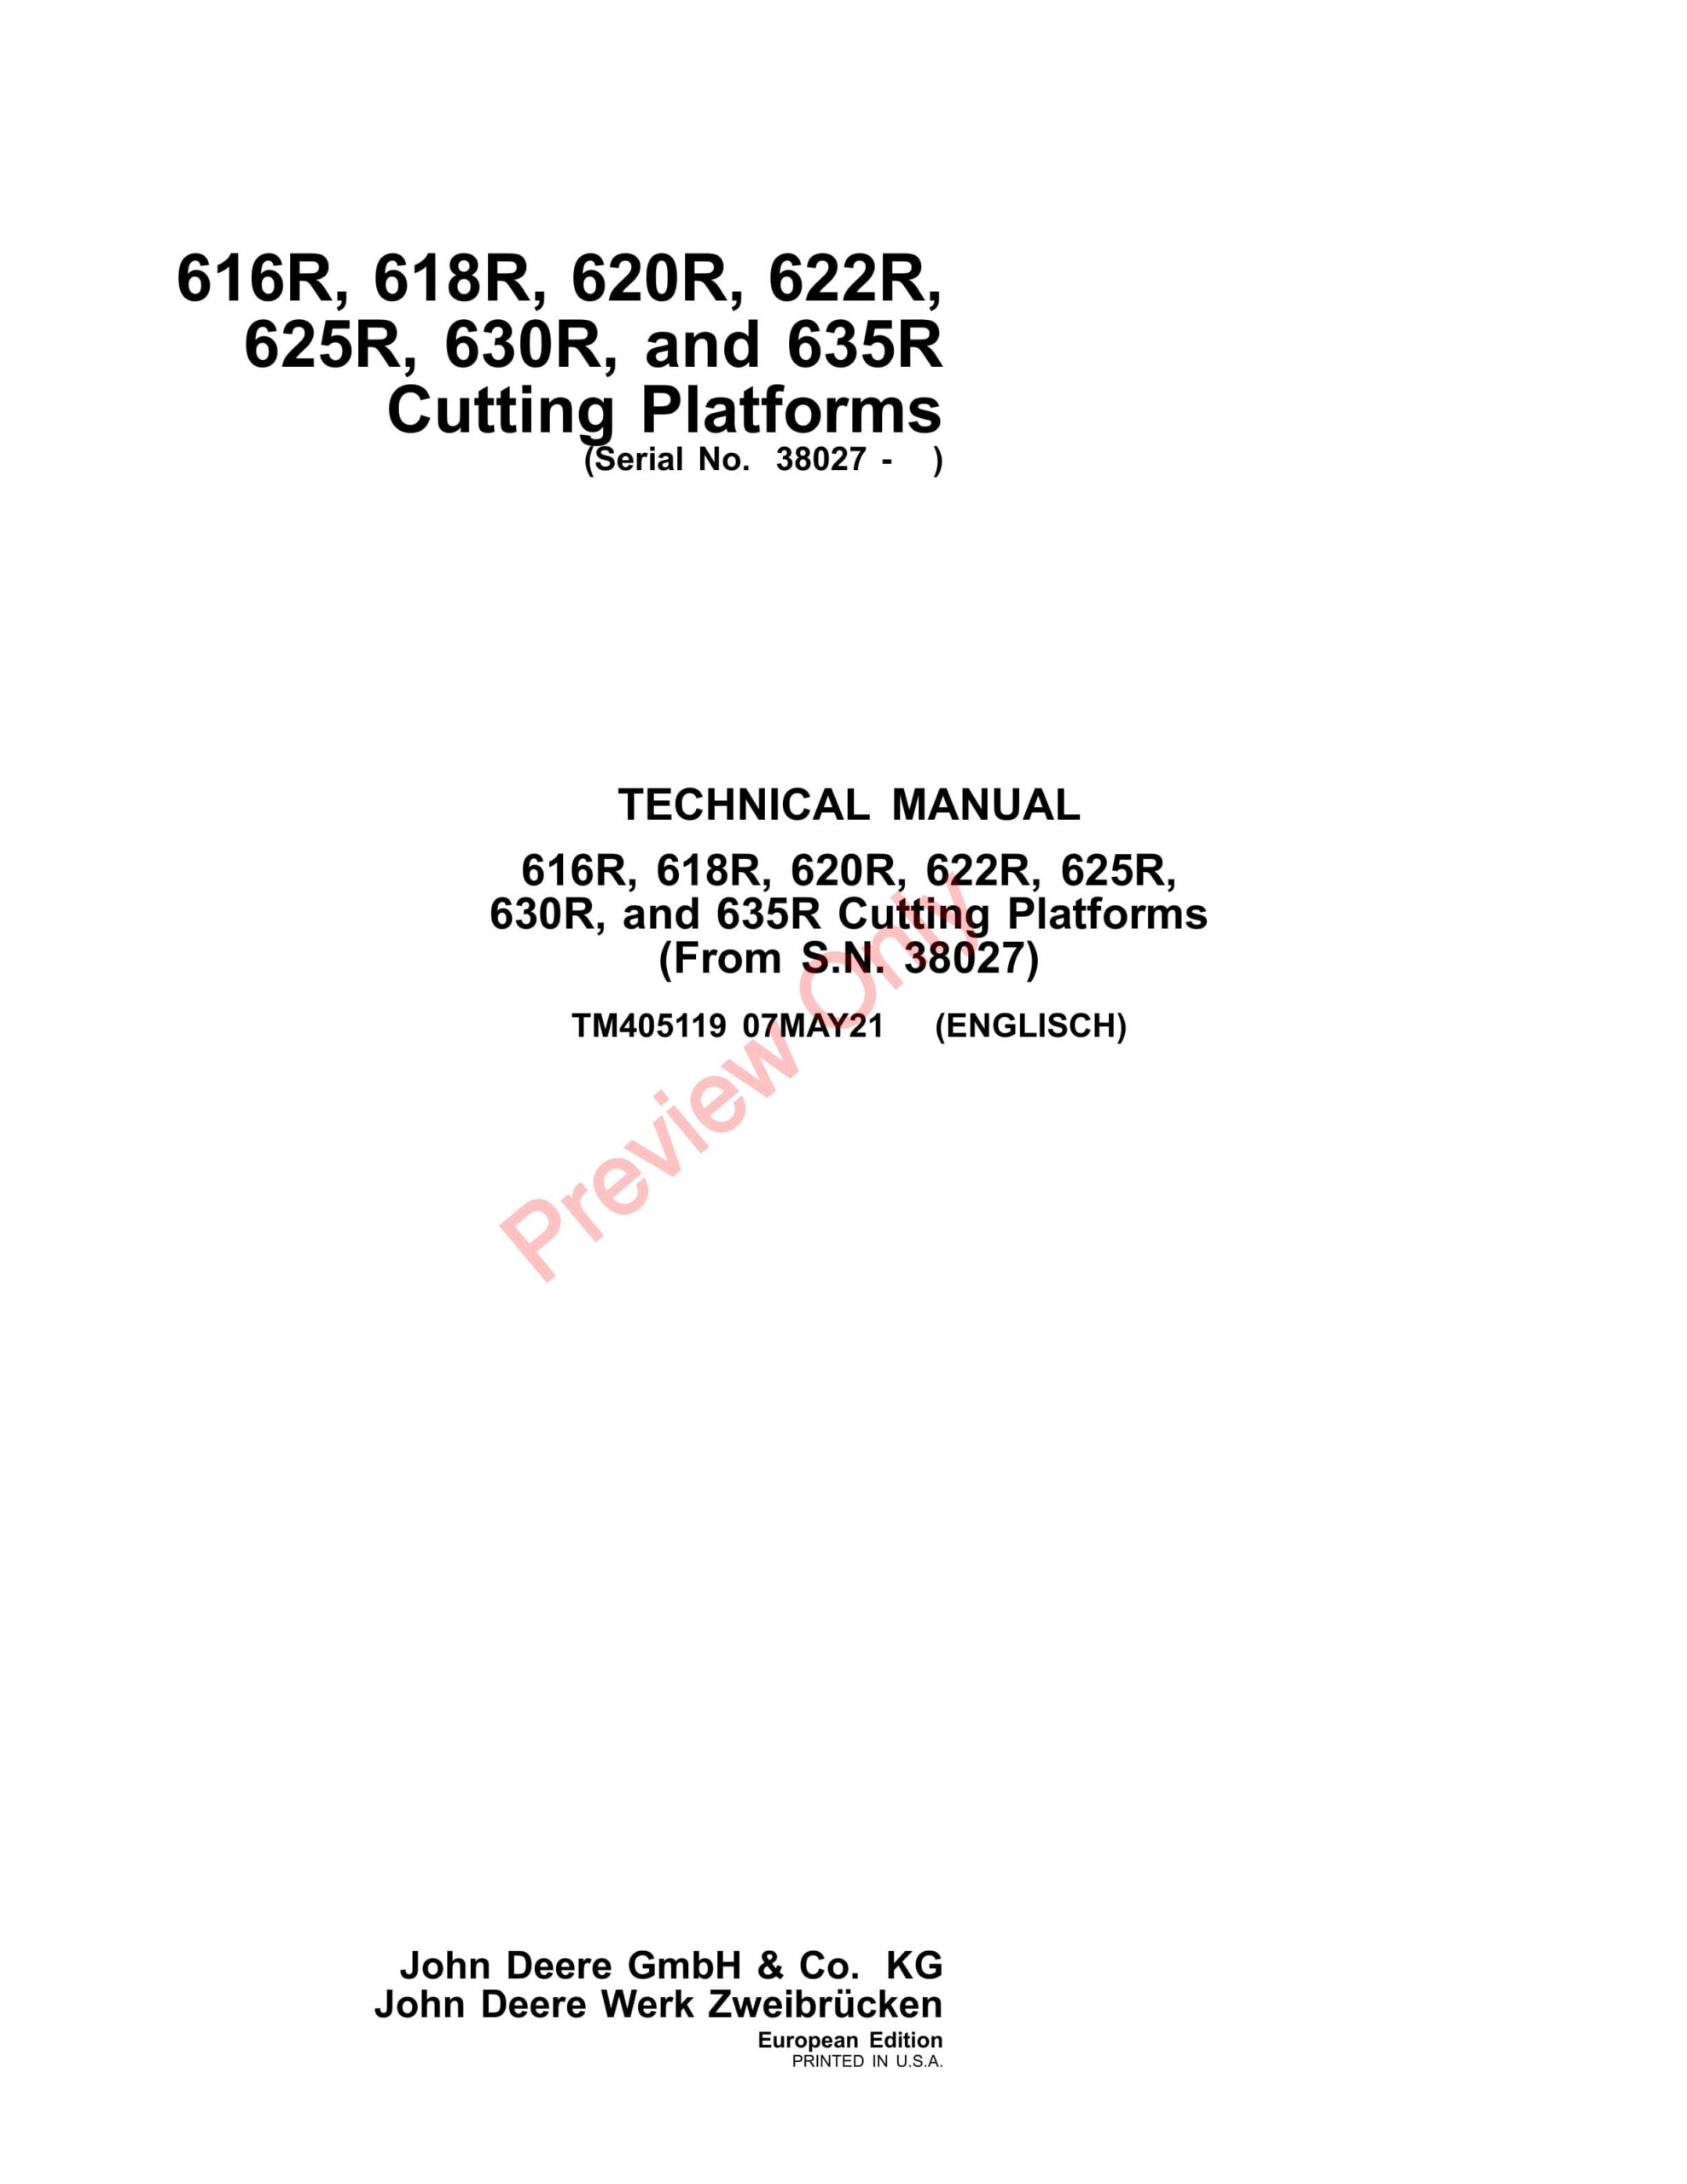 John Deere 616R, 618R, 620R, 622R, 625R, 630R, and 635R Cutting Platforms (038027 Technical Manual TM405119 07MAY21-1